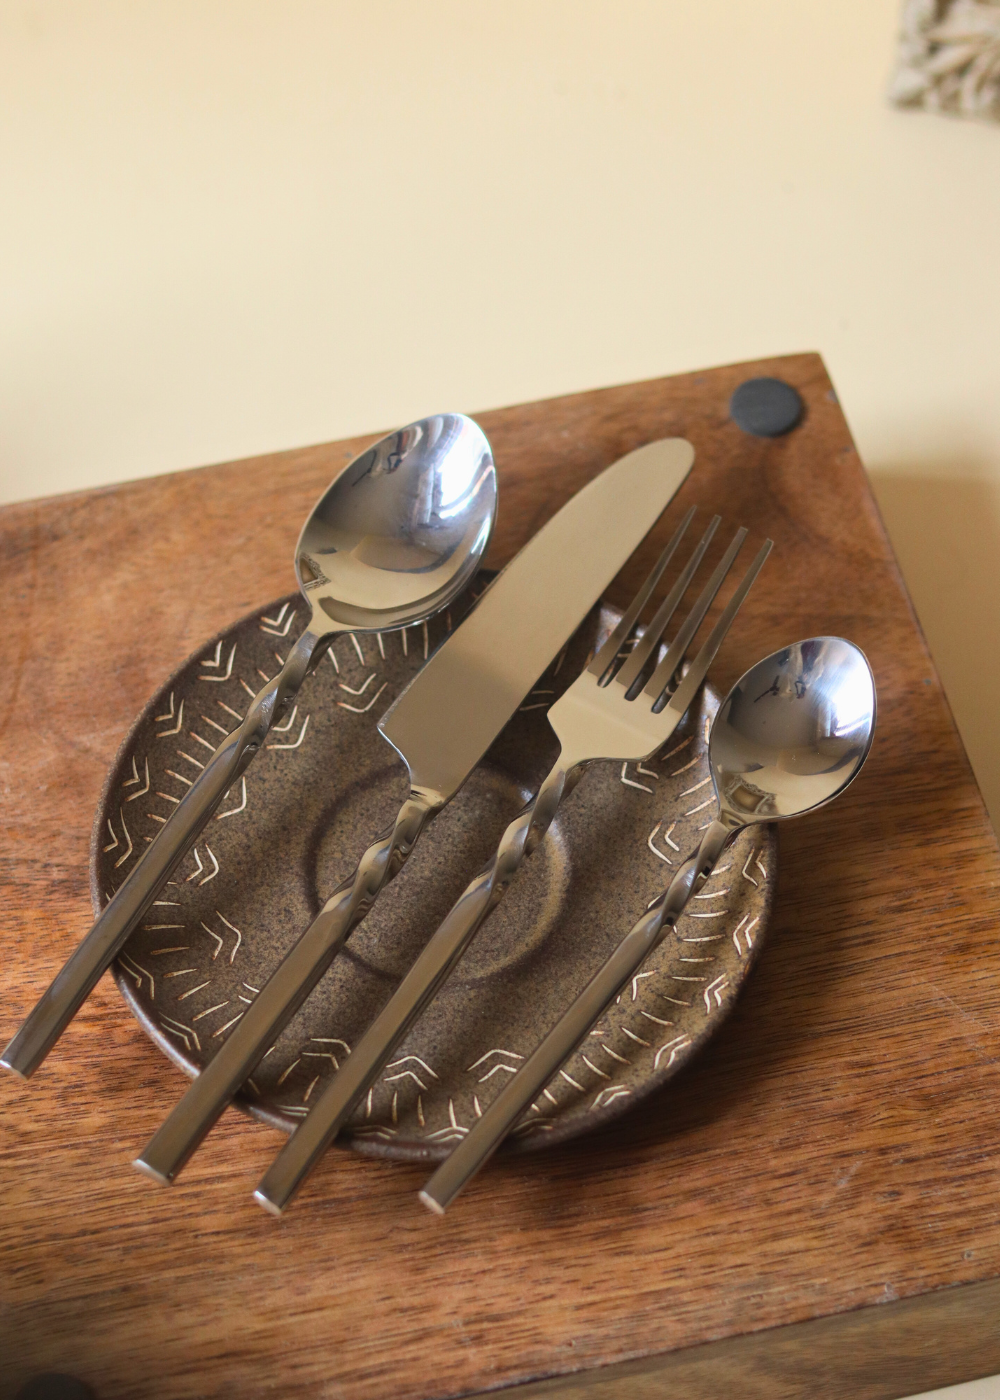 Kitchenware twisted handmade cutlery set